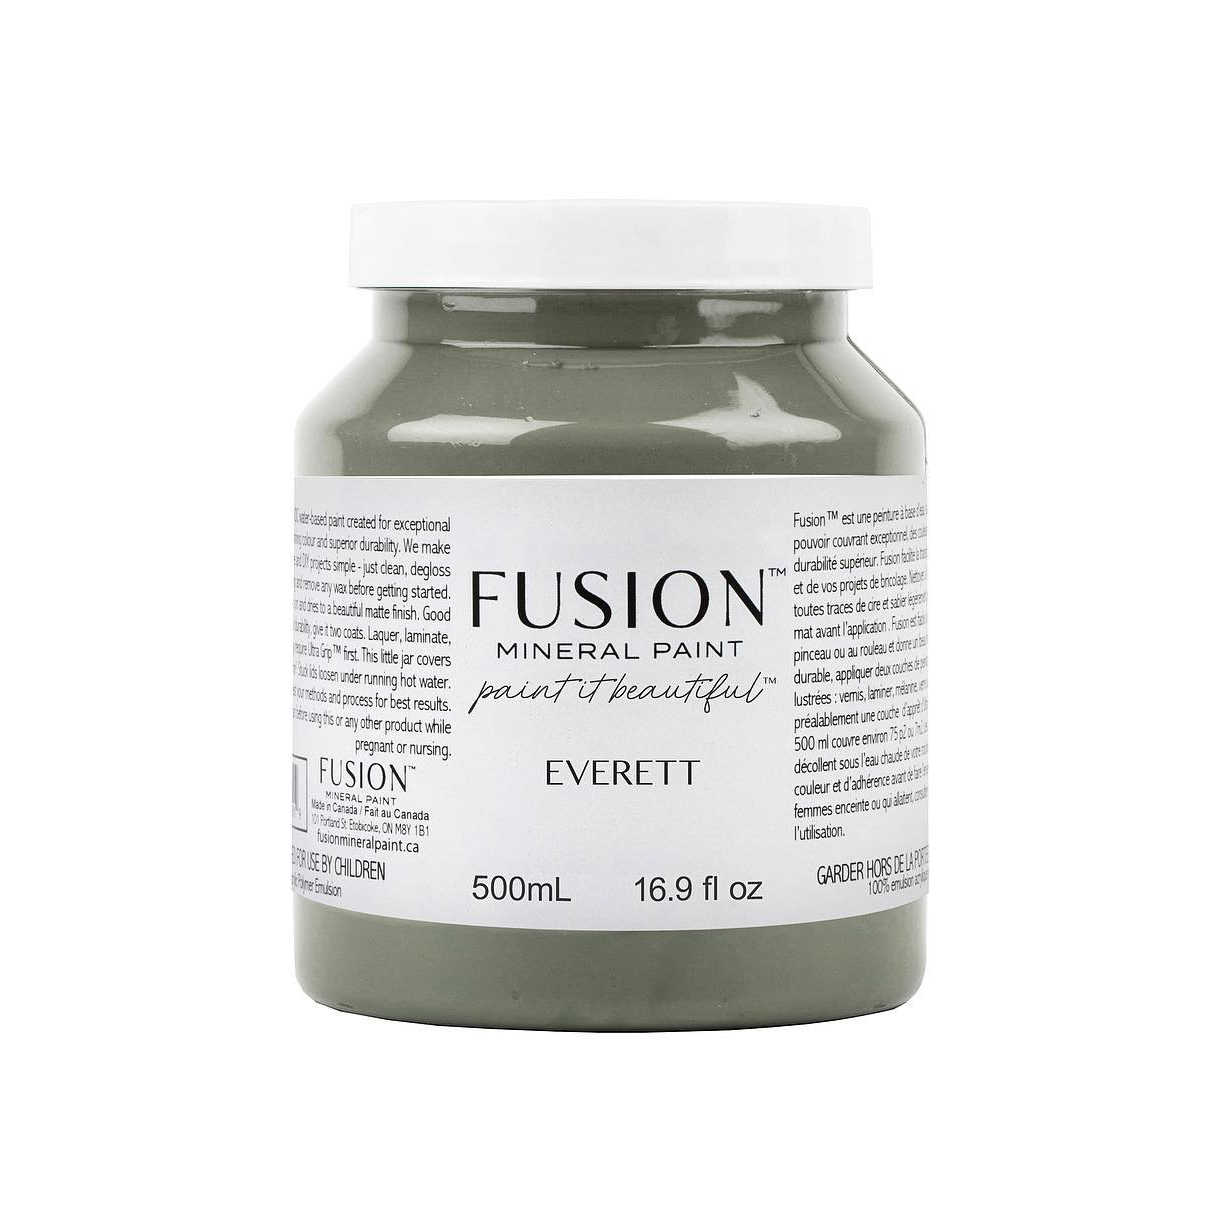 FUSION Mineral Paint - Everett 500ml